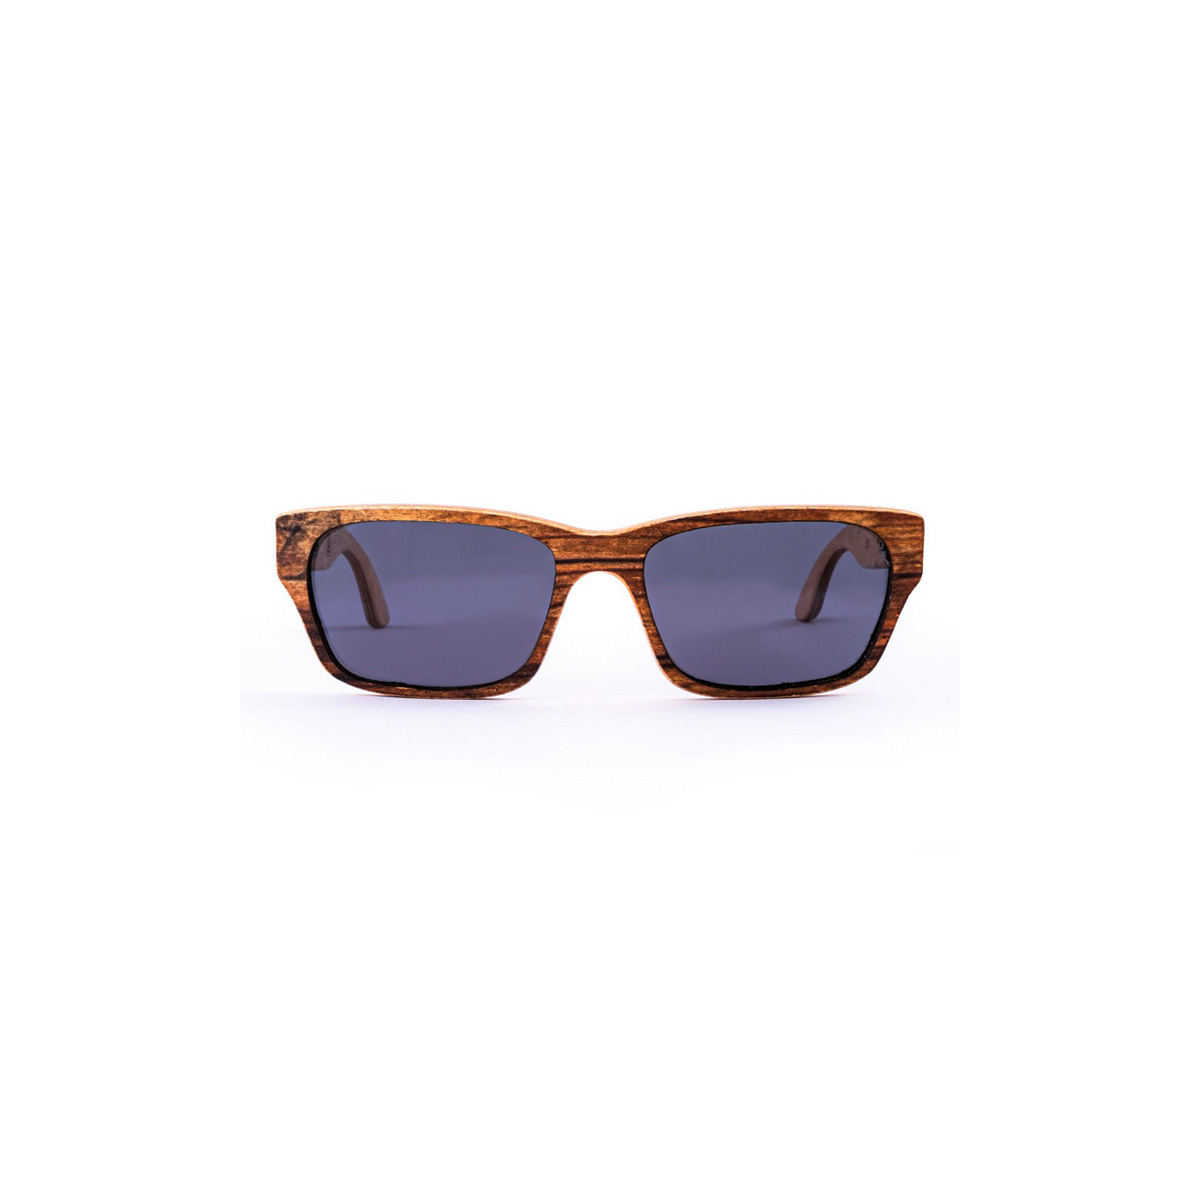 Natural wooden sunglasses